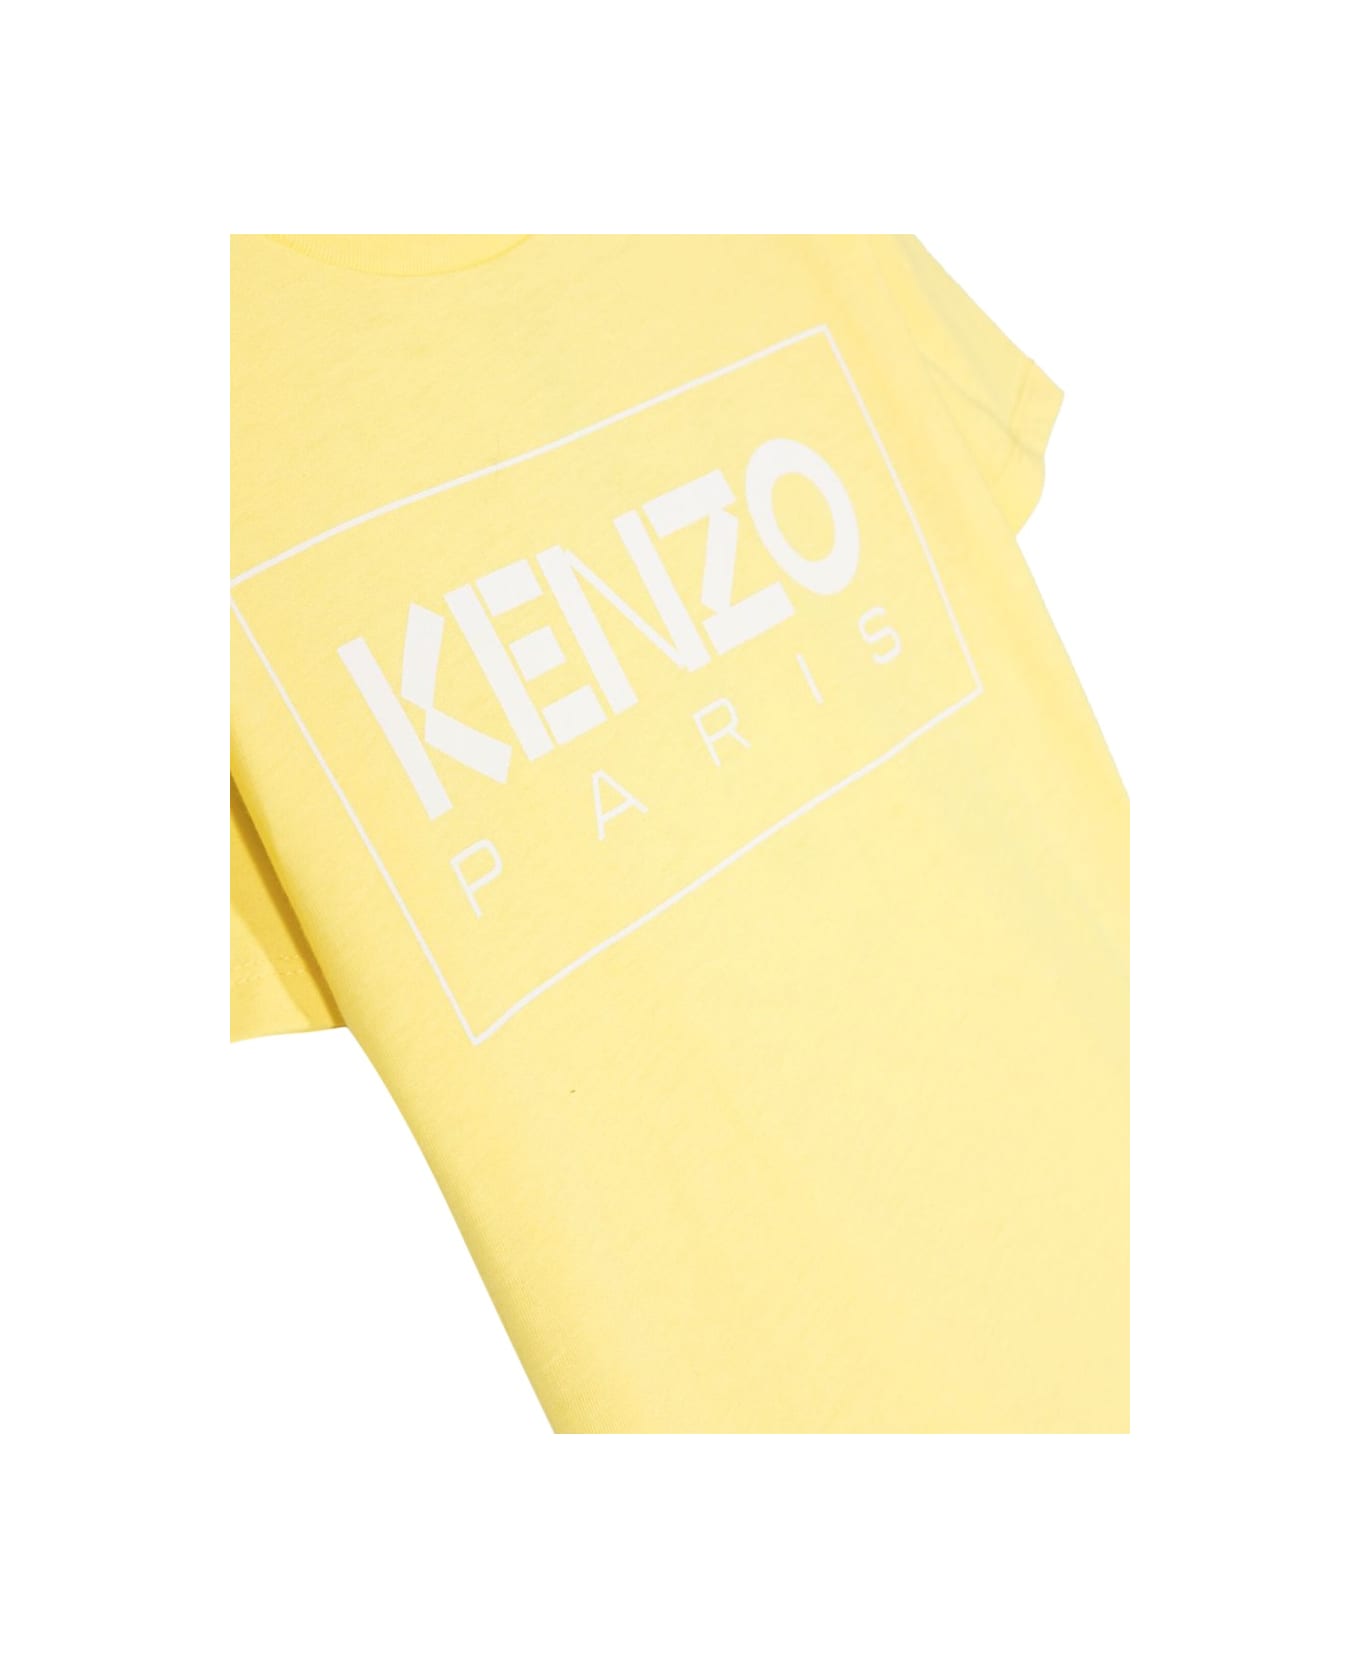 Kenzo Kids Mc Logo T-shirt - YELLOW